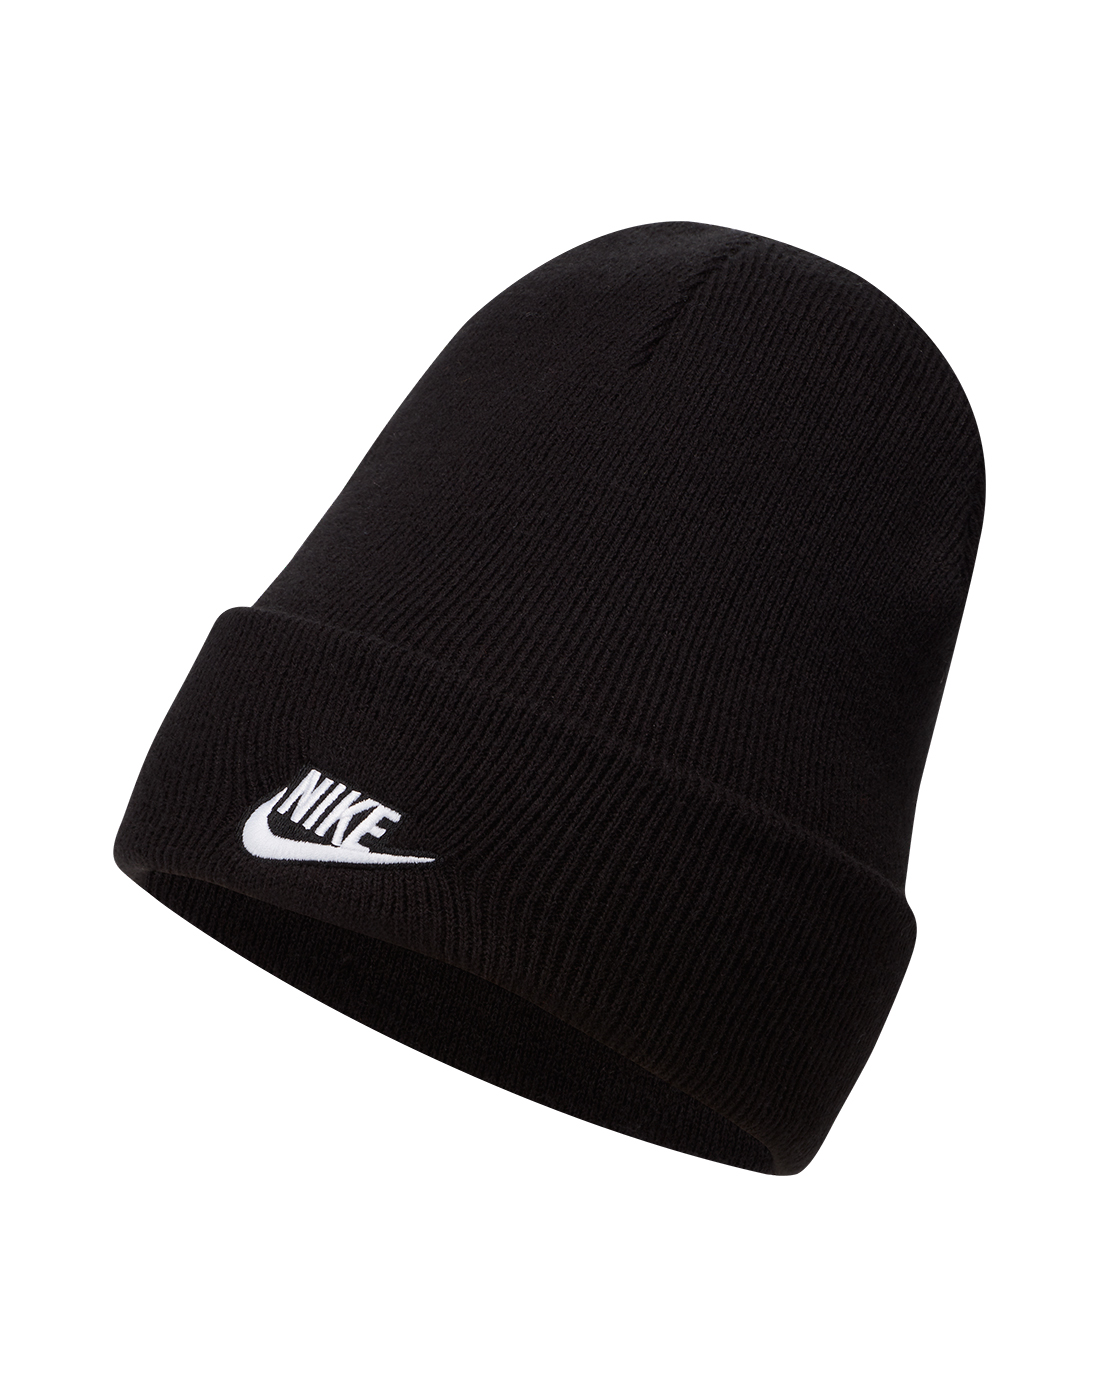 Nike Utility Woolly Hat - Black | Life Style Sports EU